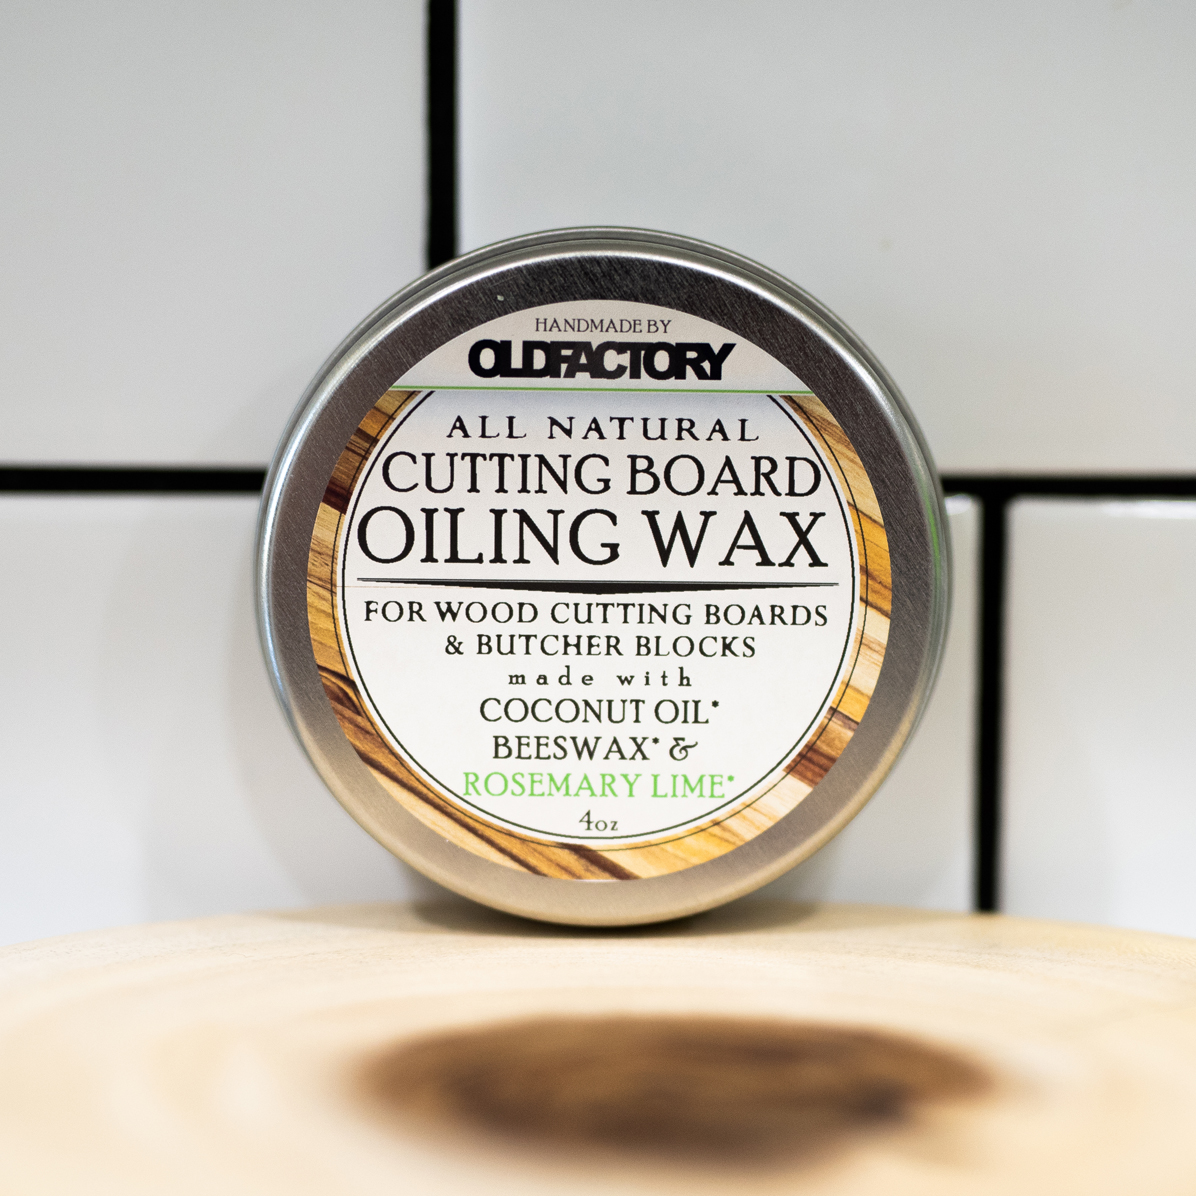 Caron & Doucet Cutting Board Wax